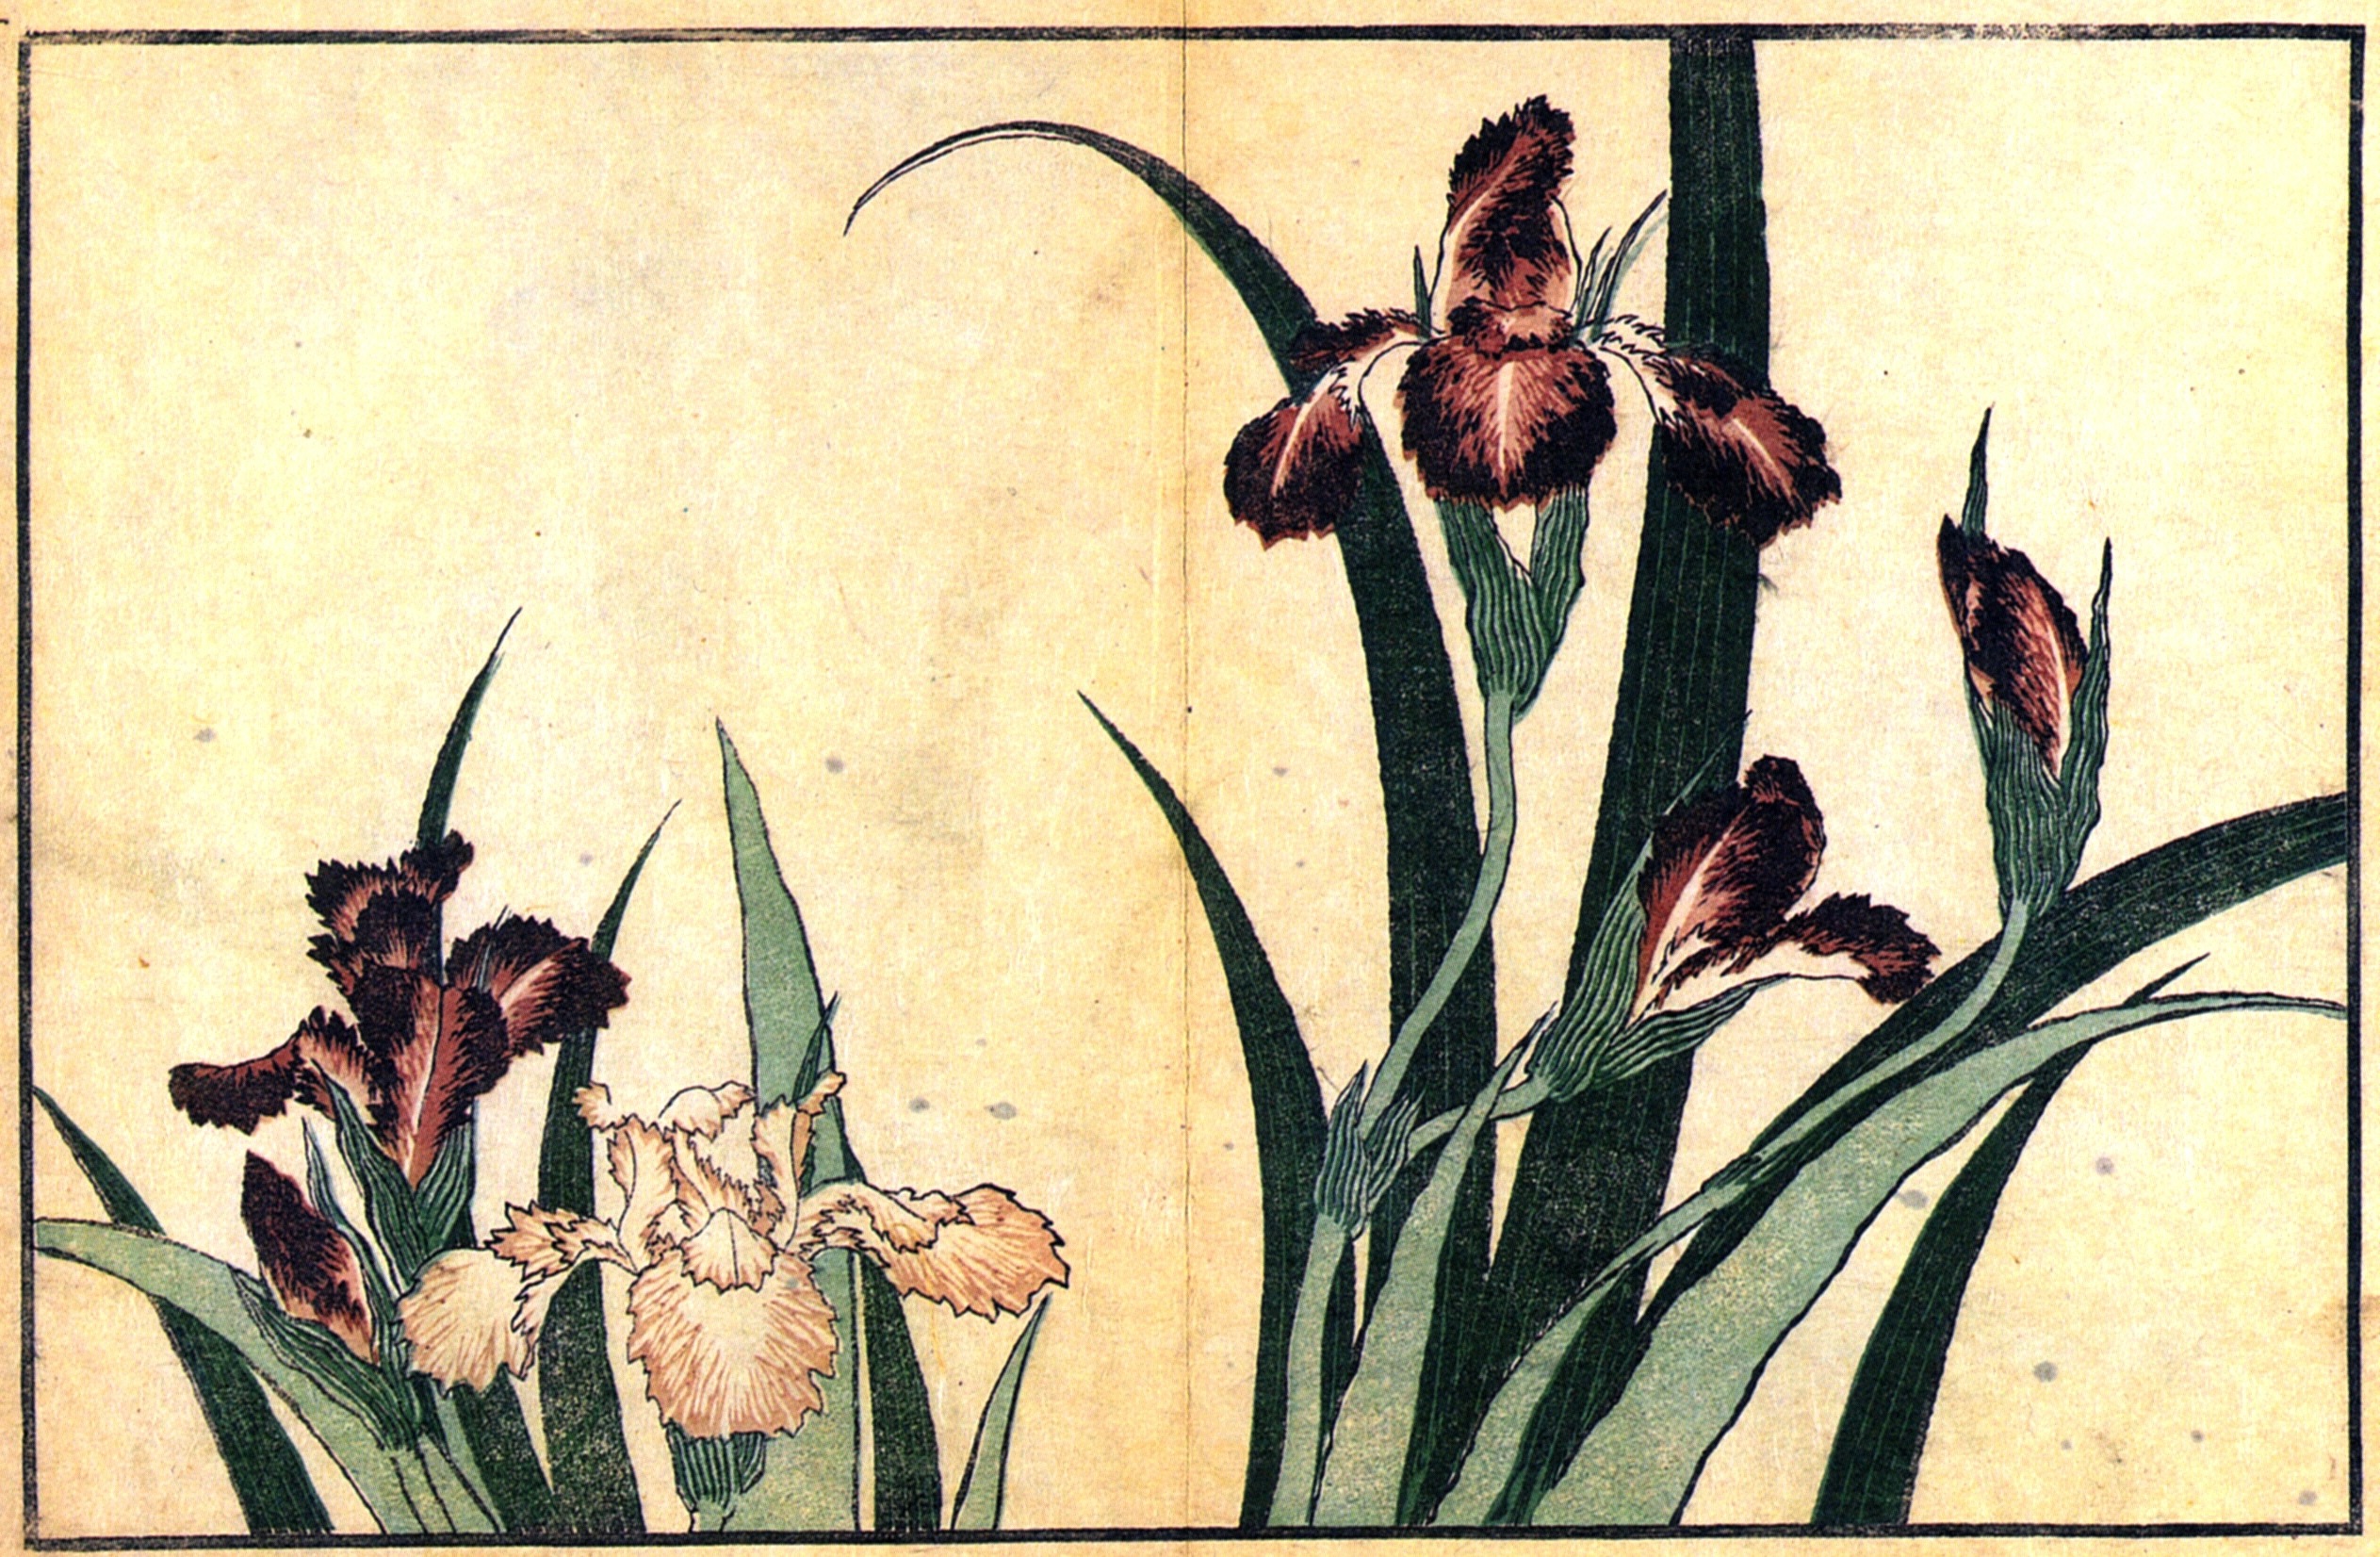 http://upload.wikimedia.org/wikipedia/commons/8/85/Hokusai_Irises.jpg